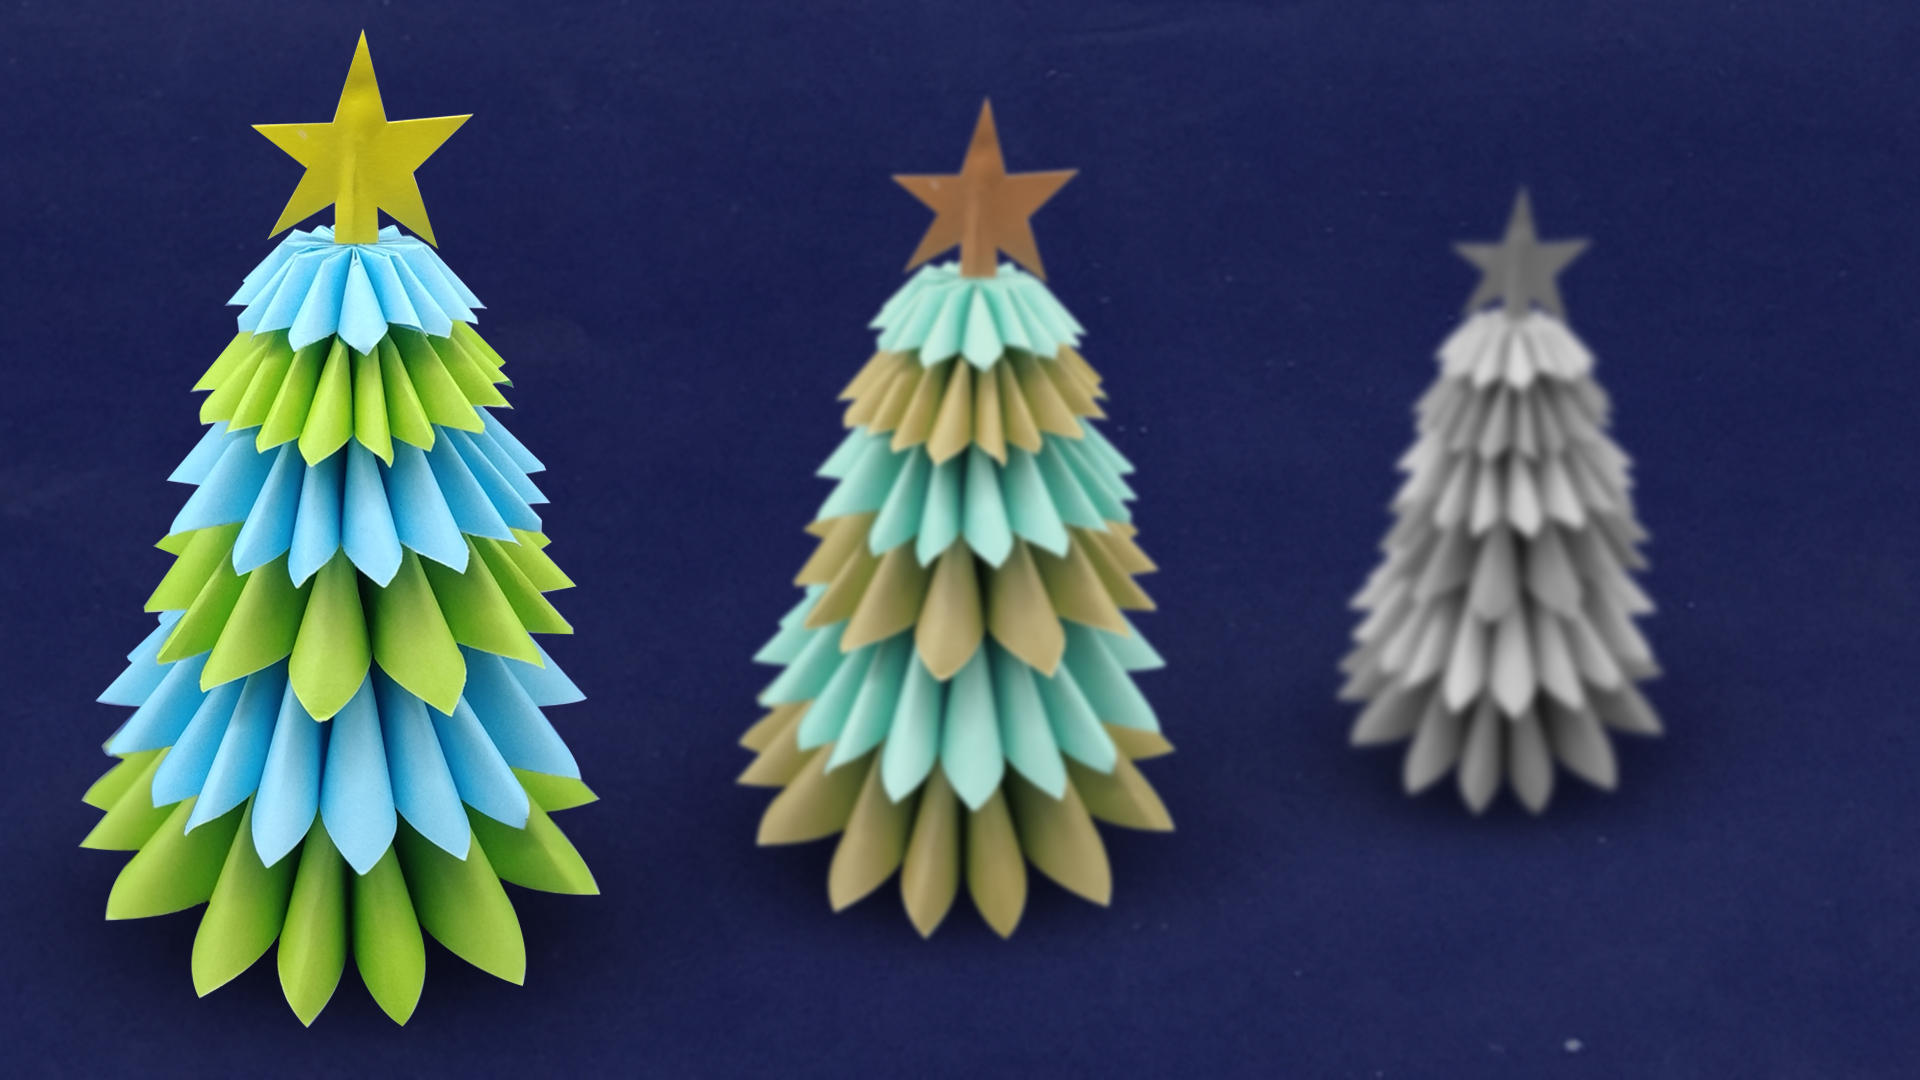 diy-3d-paper-christmas-tree-how-to-make-paper-xmas-tree-christmas